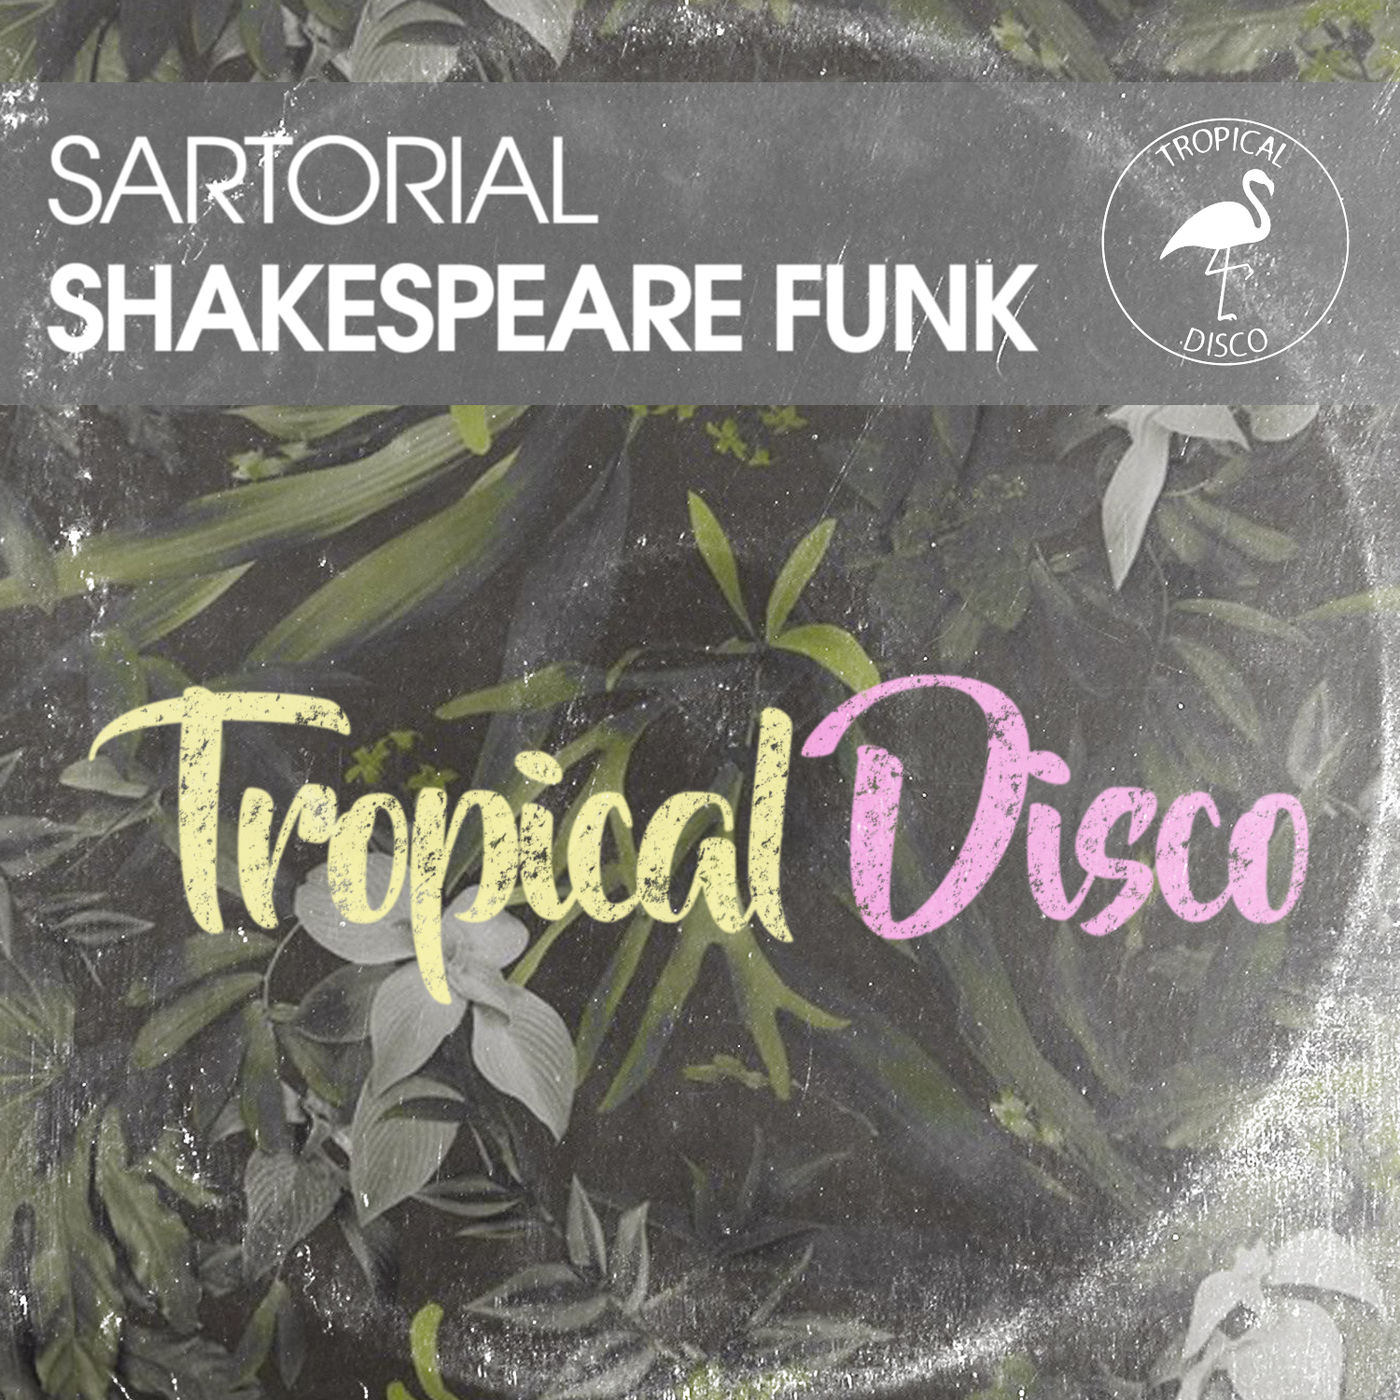 Sartorial - Shakespeare Funk / Tropical Disco Records